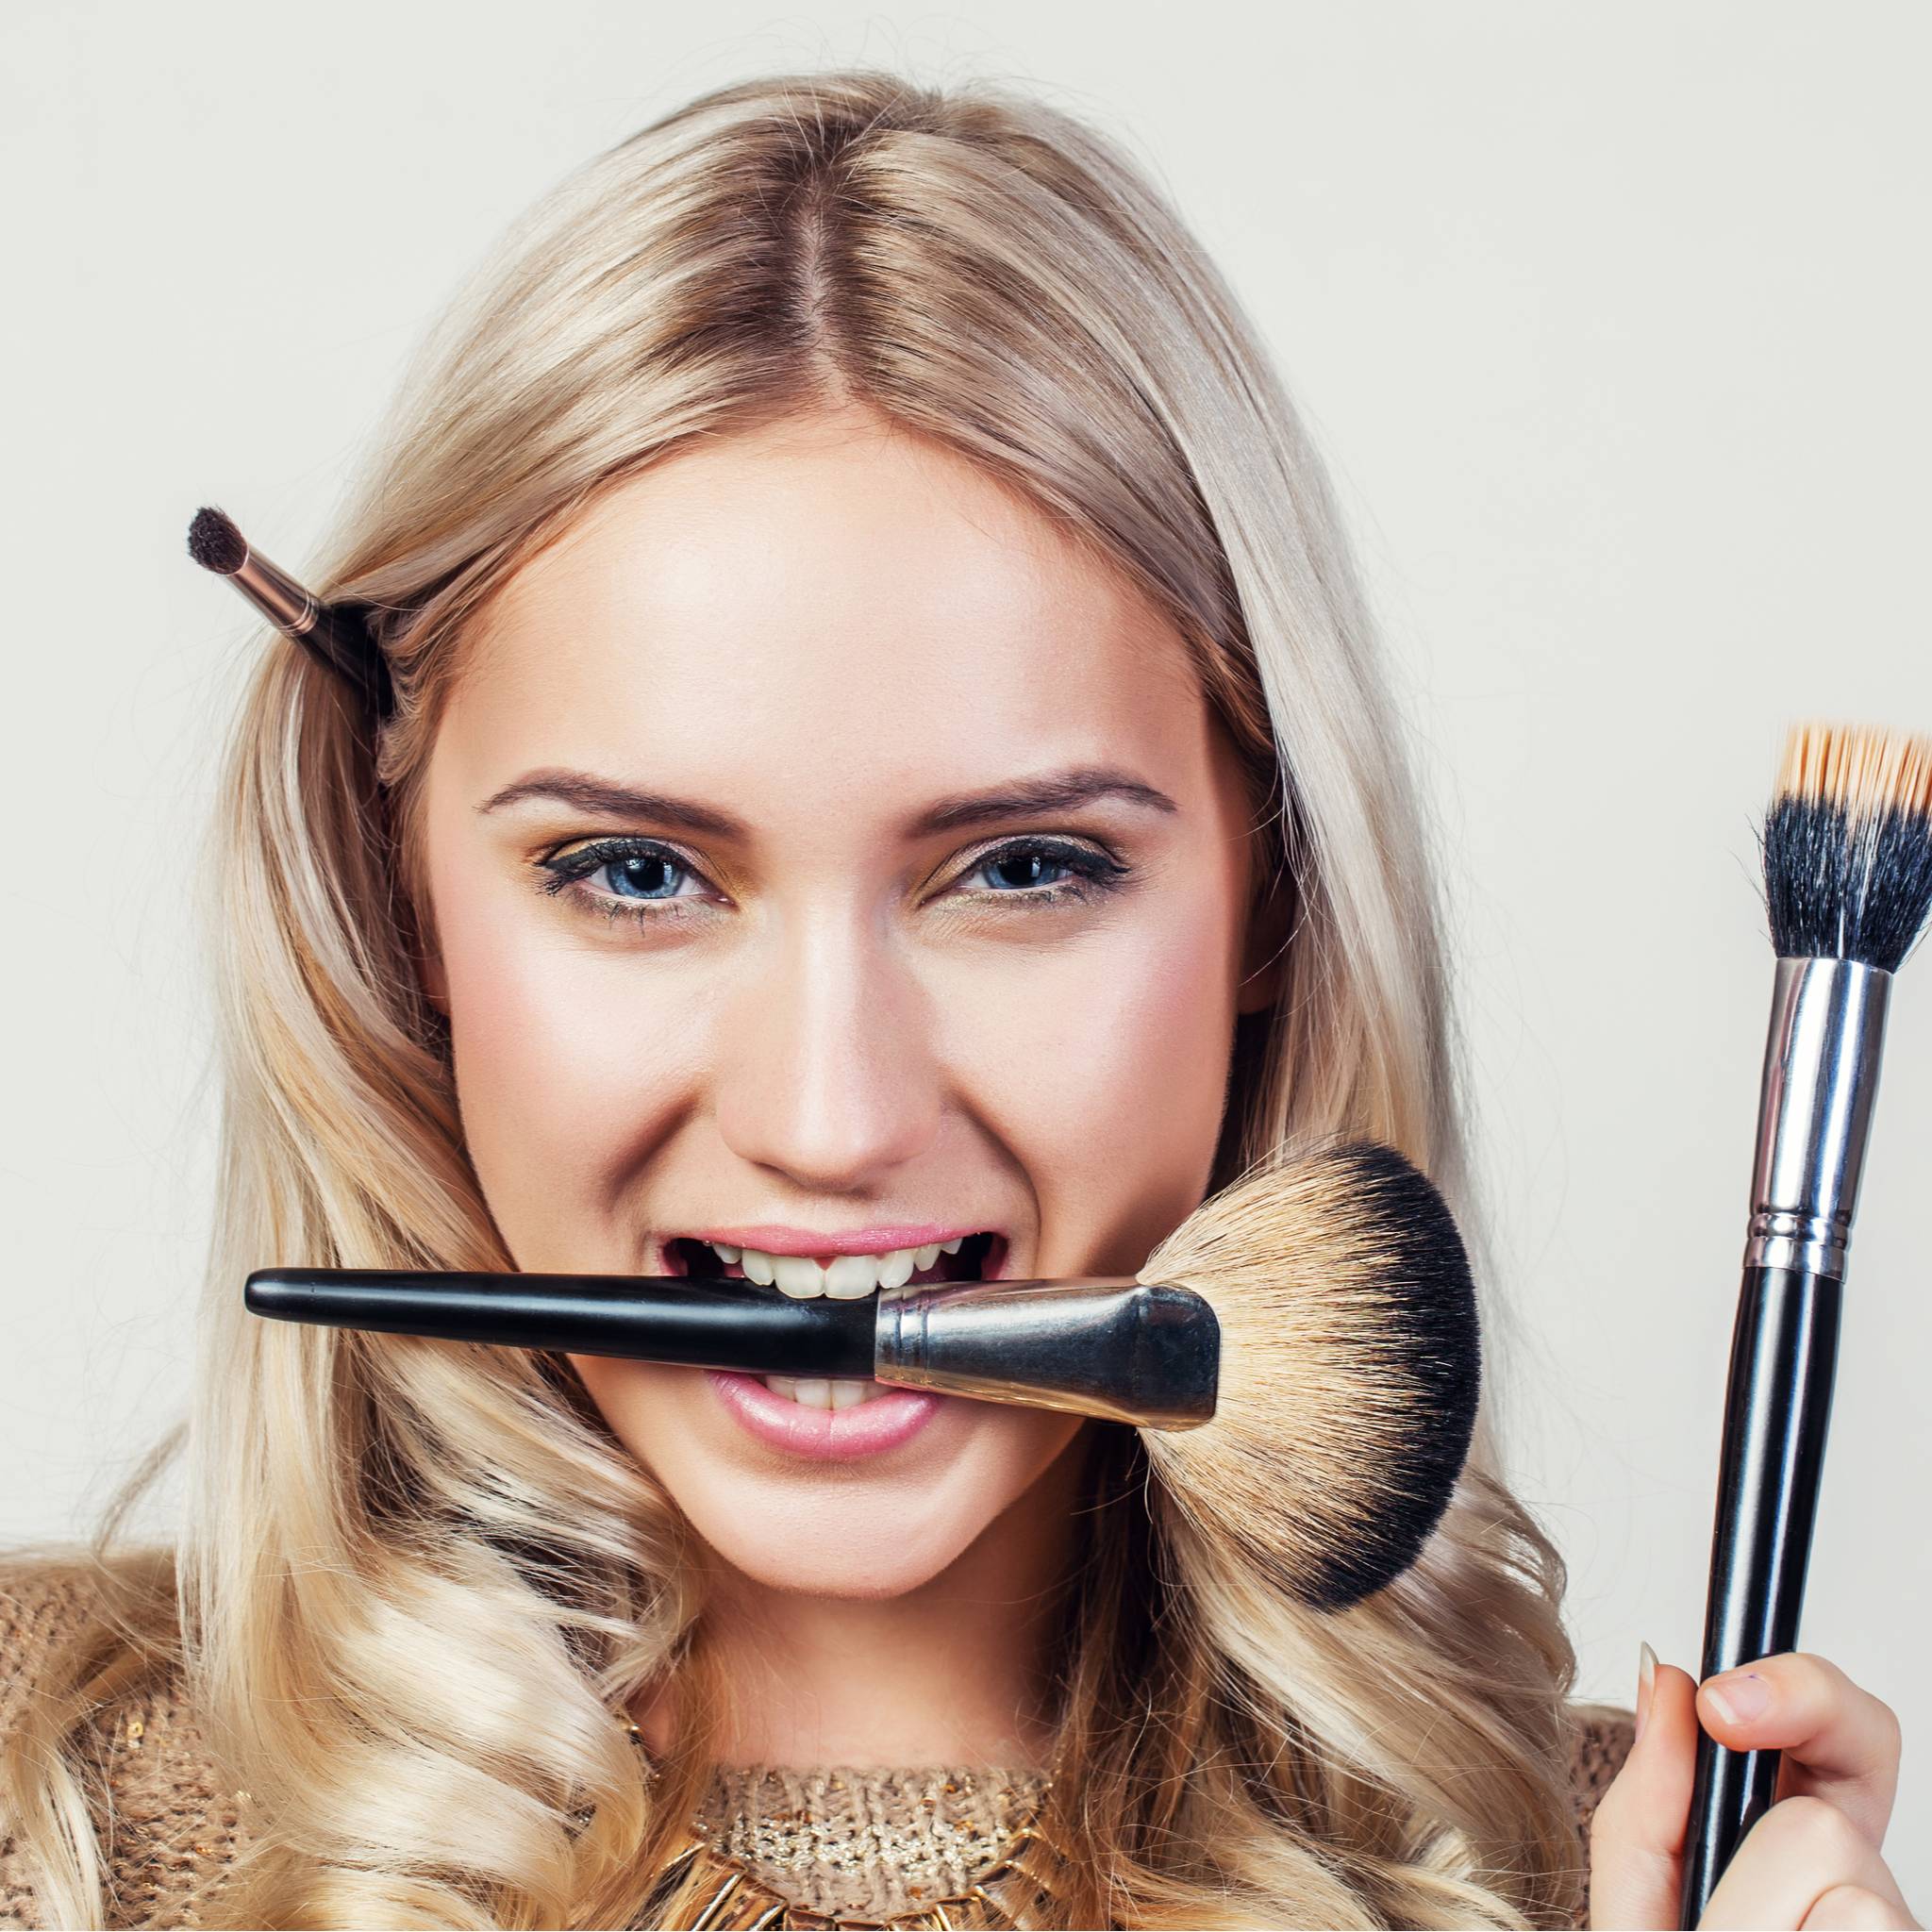 Makeup artist bullied apprentice